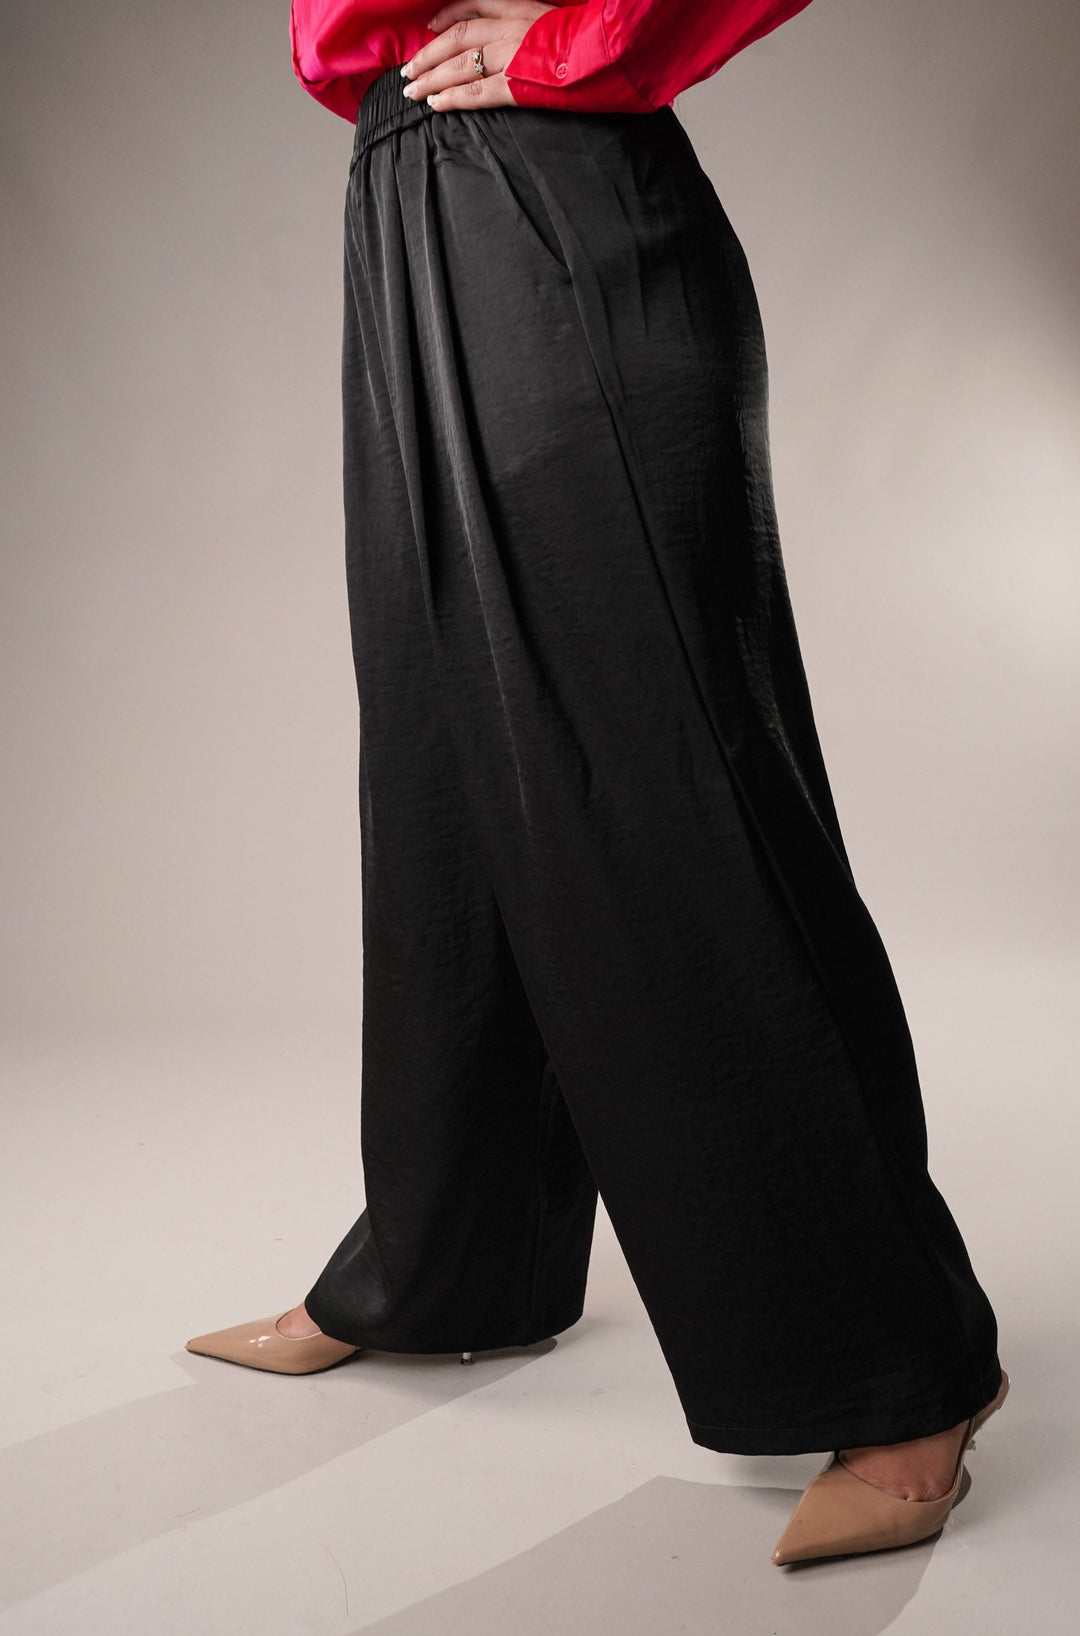 Stylish wide leg satin pants for women